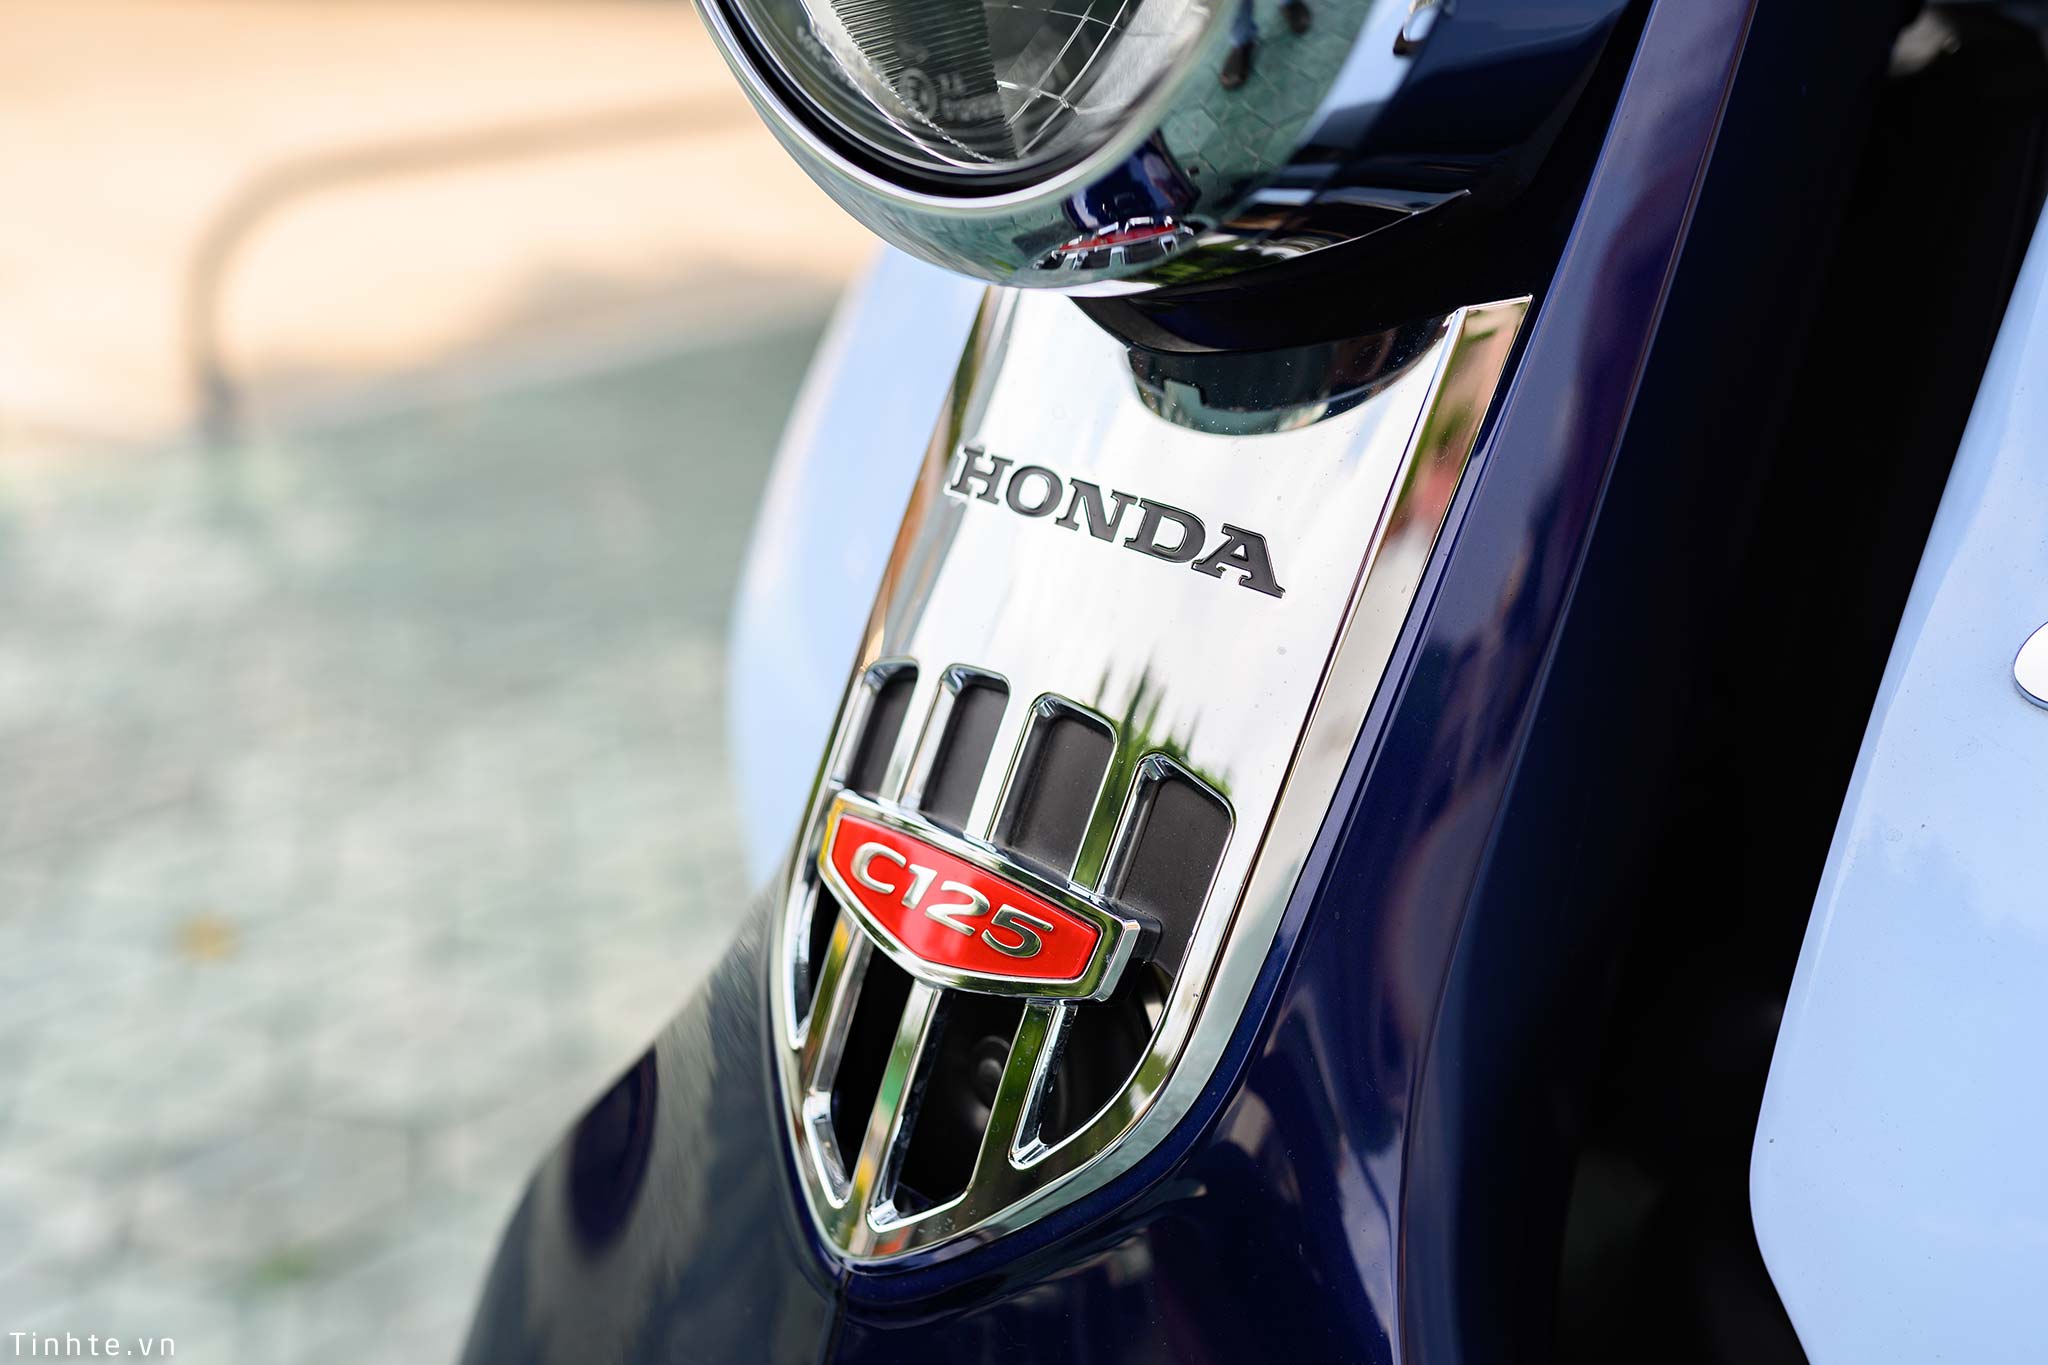 Honda-Super-Cub-C125-tinhte-2.jpg